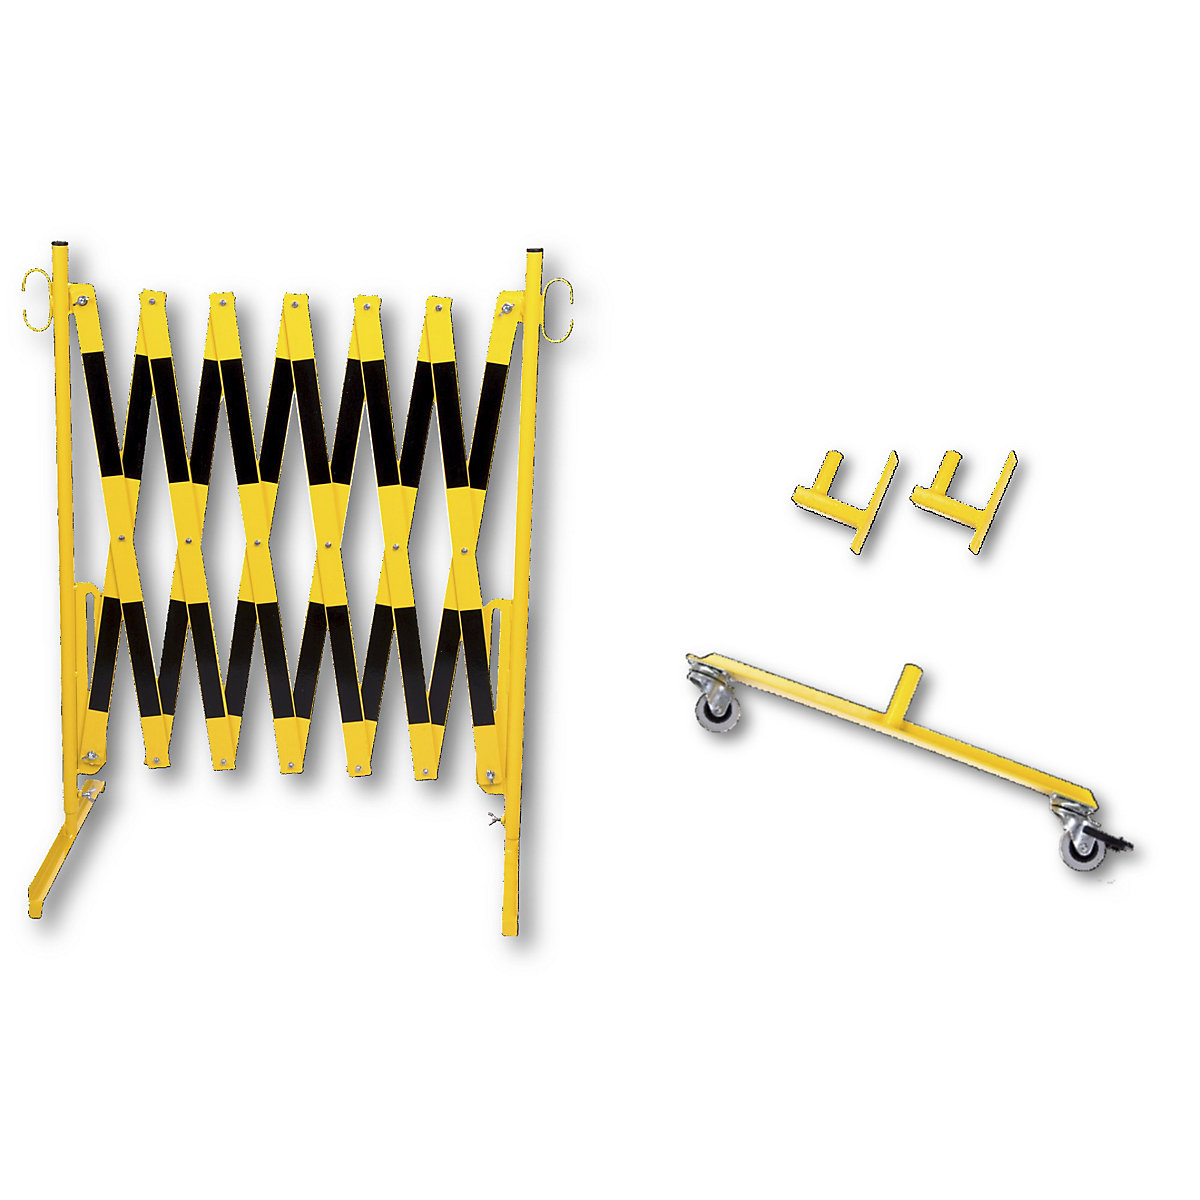 Harmonicaschaar, wandhouder, 2 wielen, geel / zwart, lengte max. 4000 mm